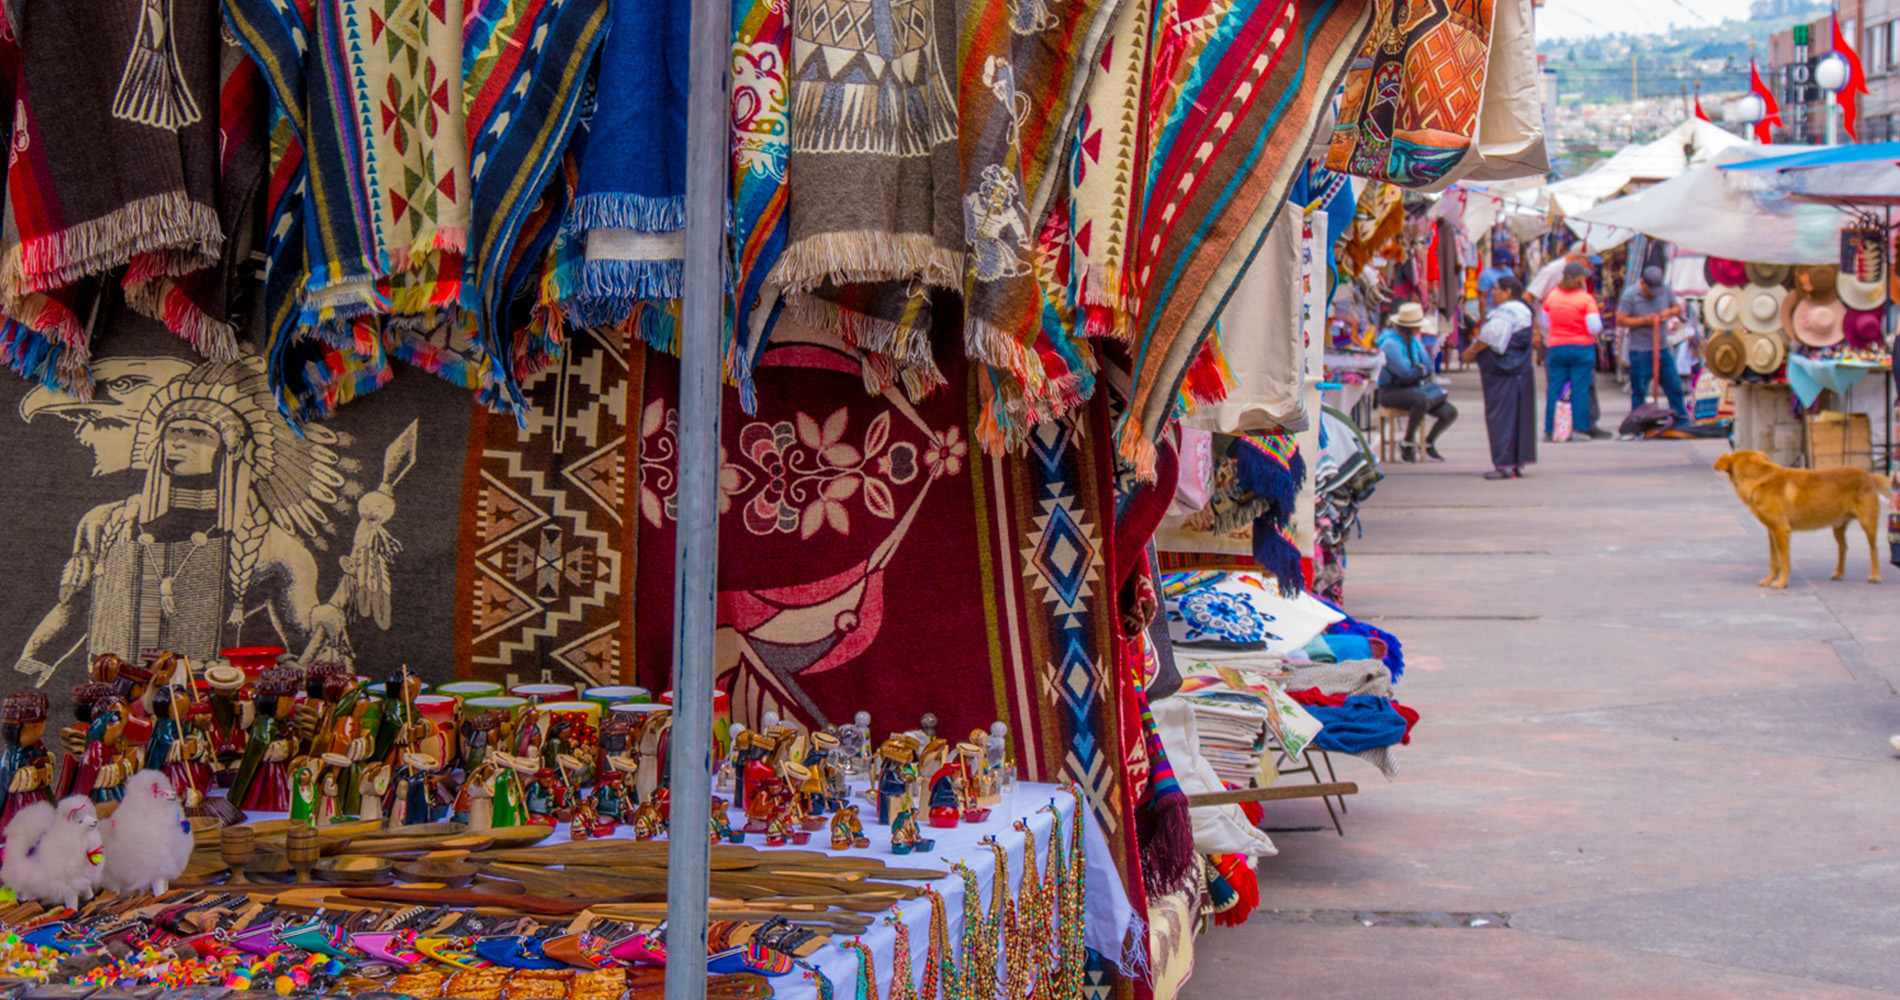 marché artisanal sur la Plaza de Los Ponchos